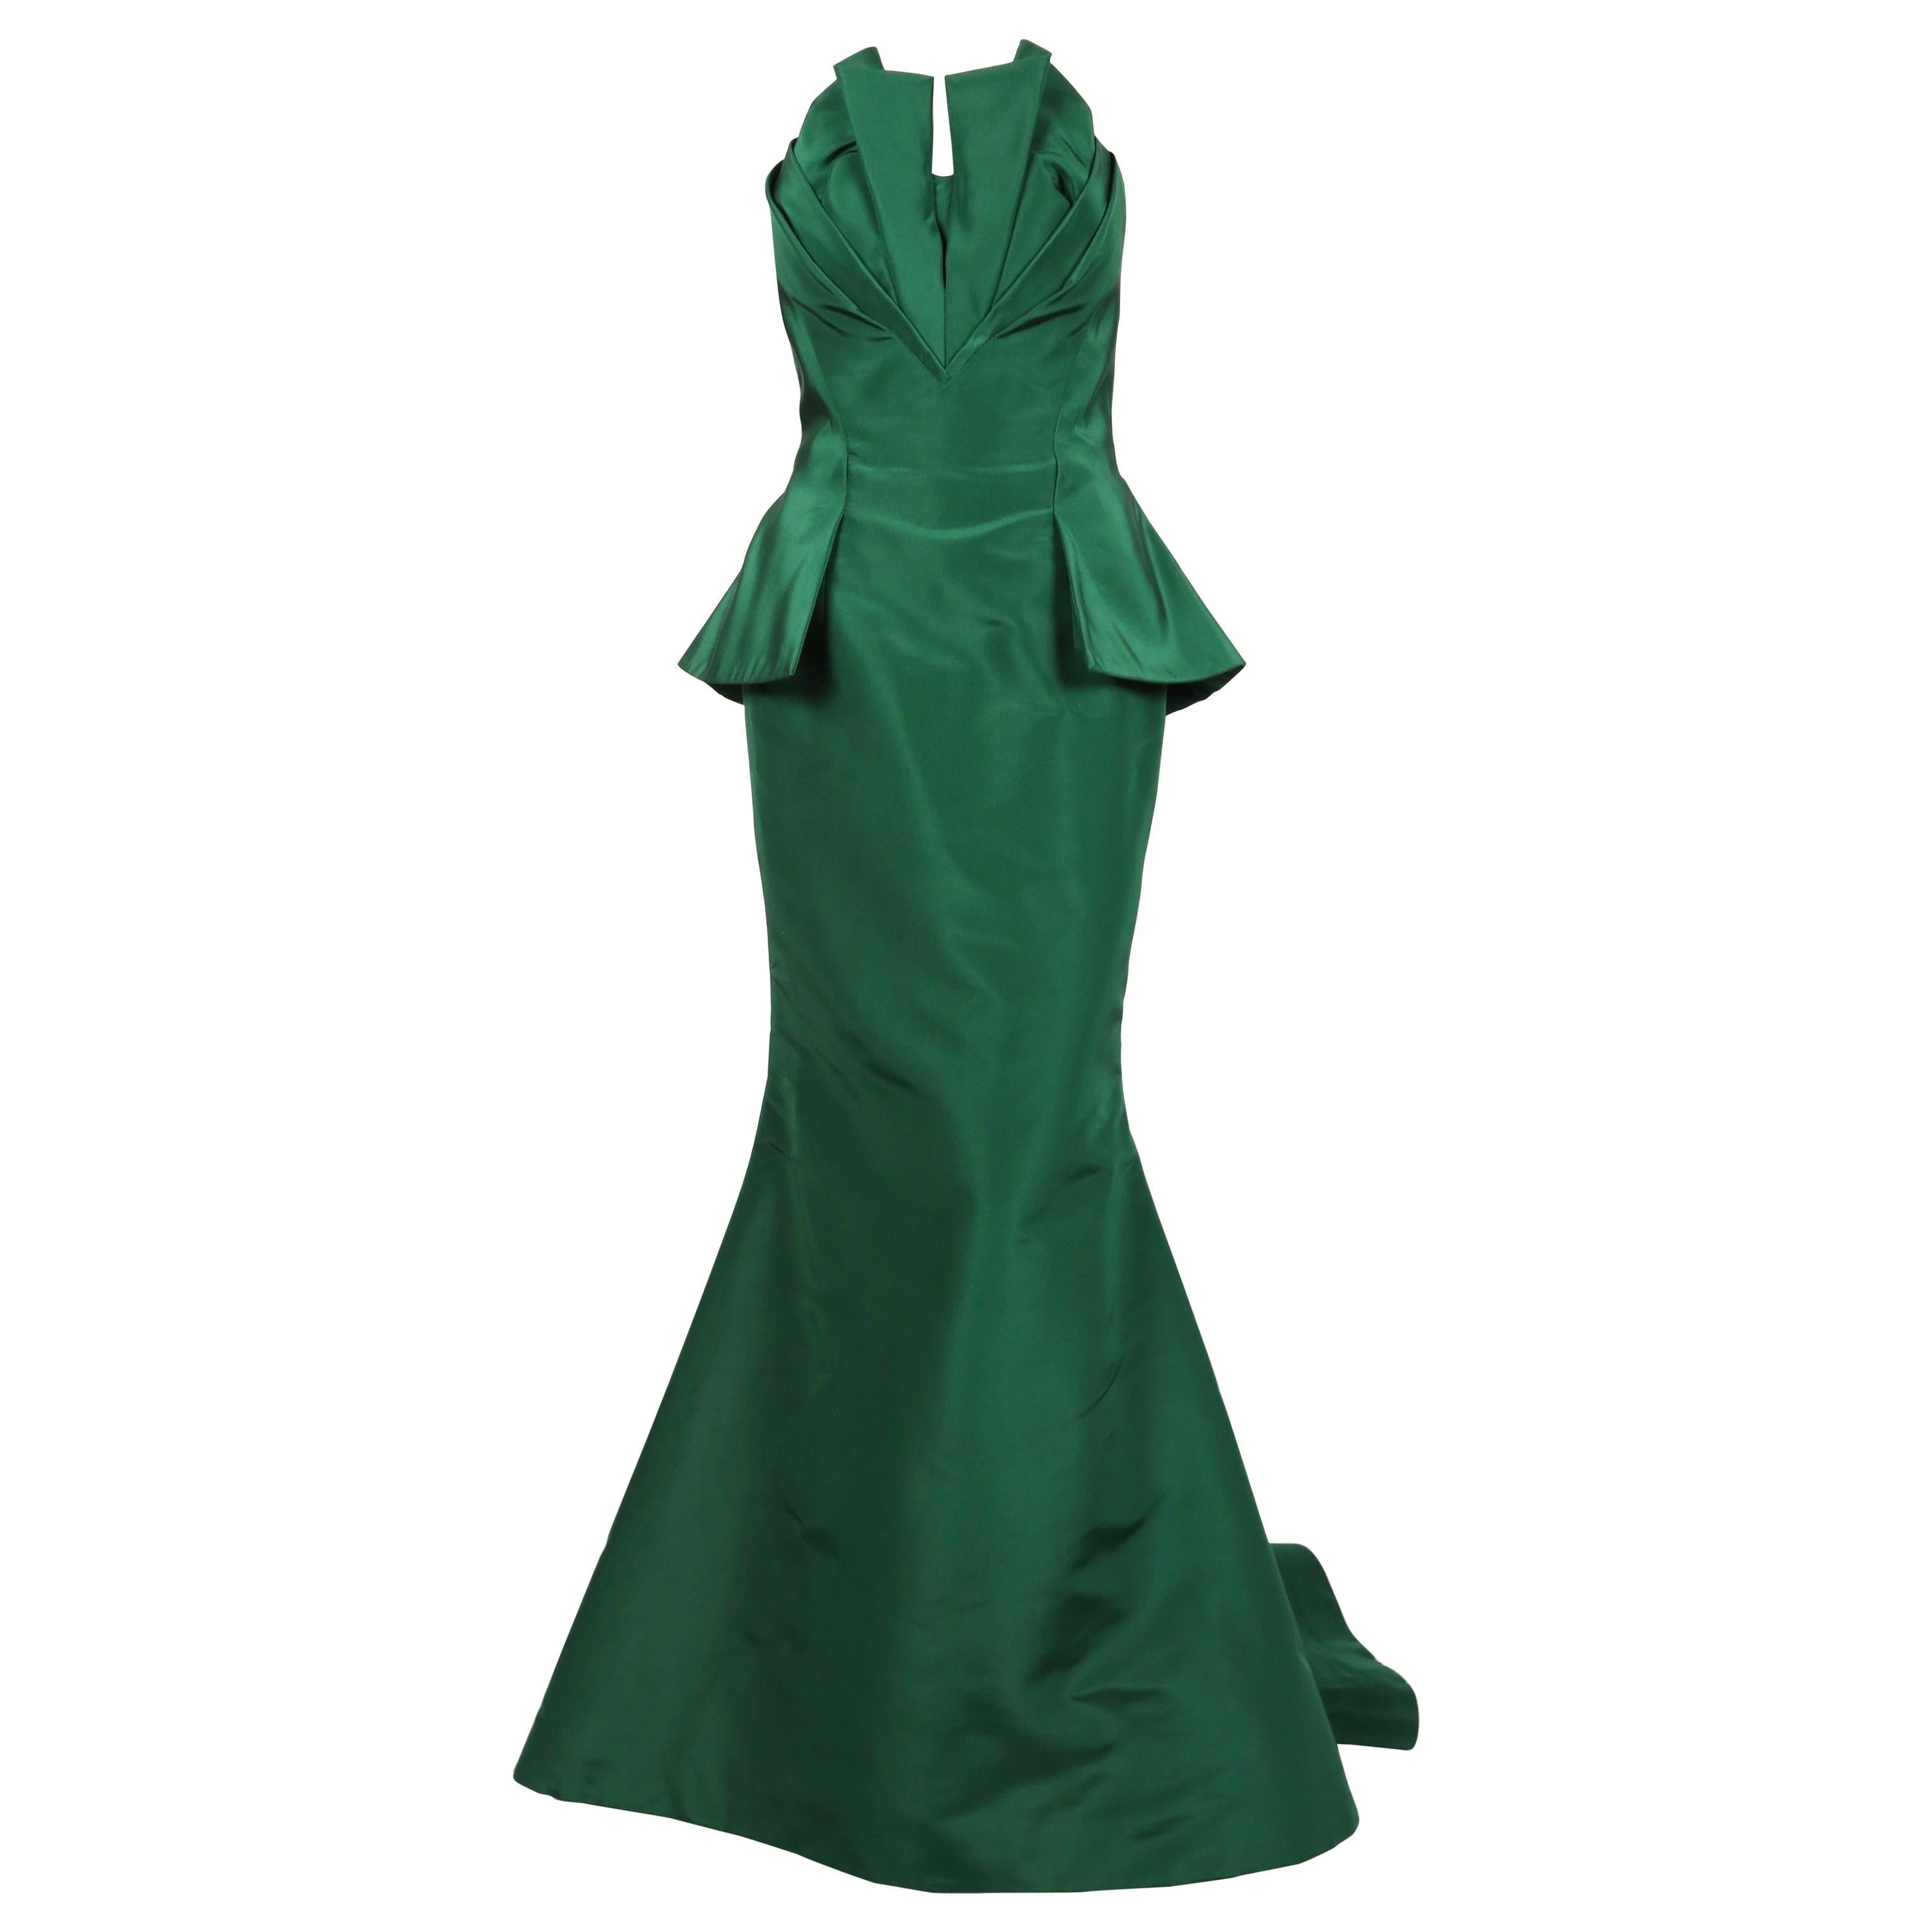 OSCAR DE LA RENTA emerald green silk runway gown with pleated bodice & train